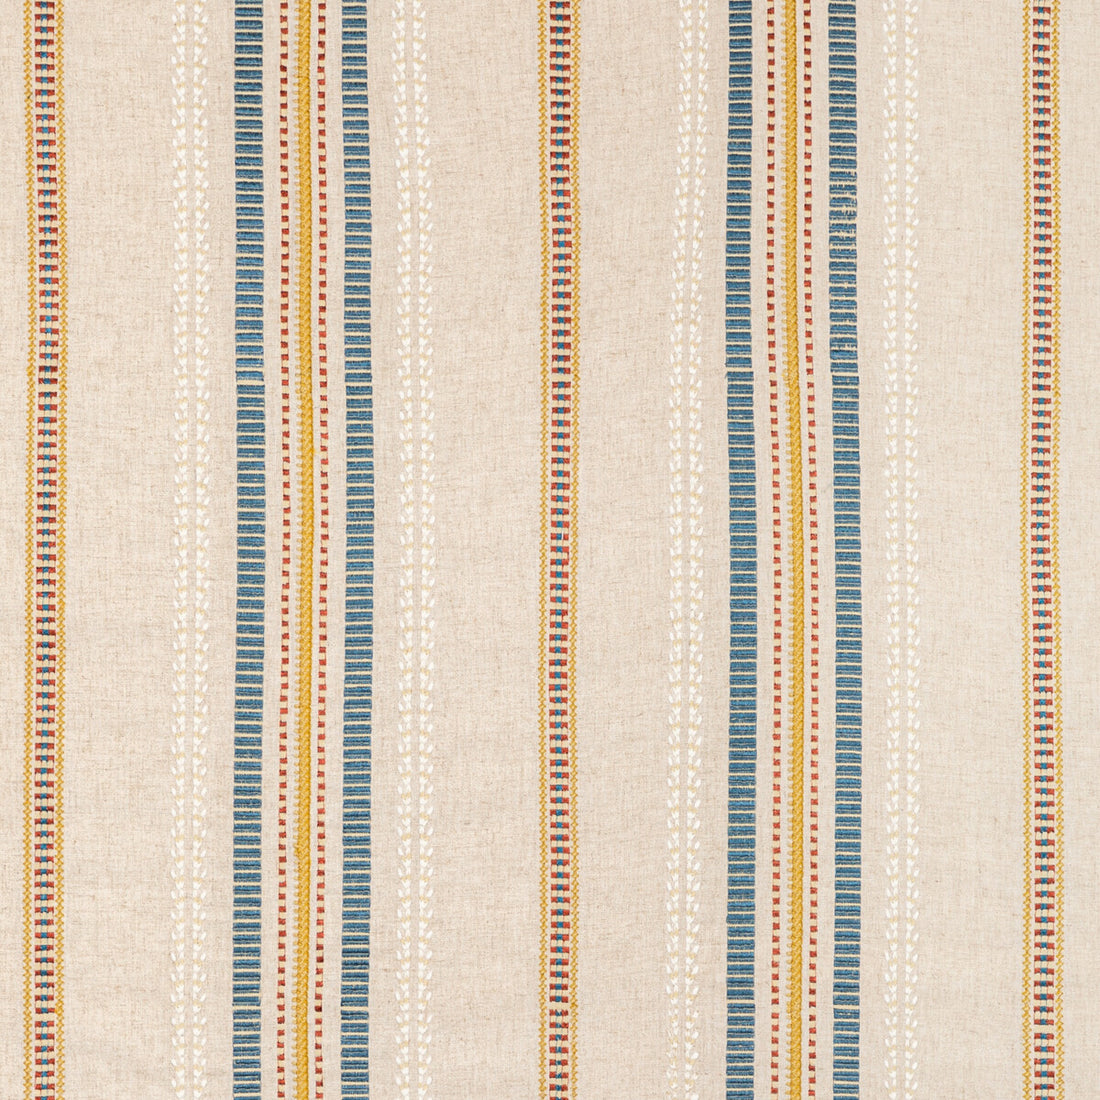 Nautique Emb fabric in denim/gold color - pattern 2020223.514.0 - by Lee Jofa in the Oscar De La Renta IV collection